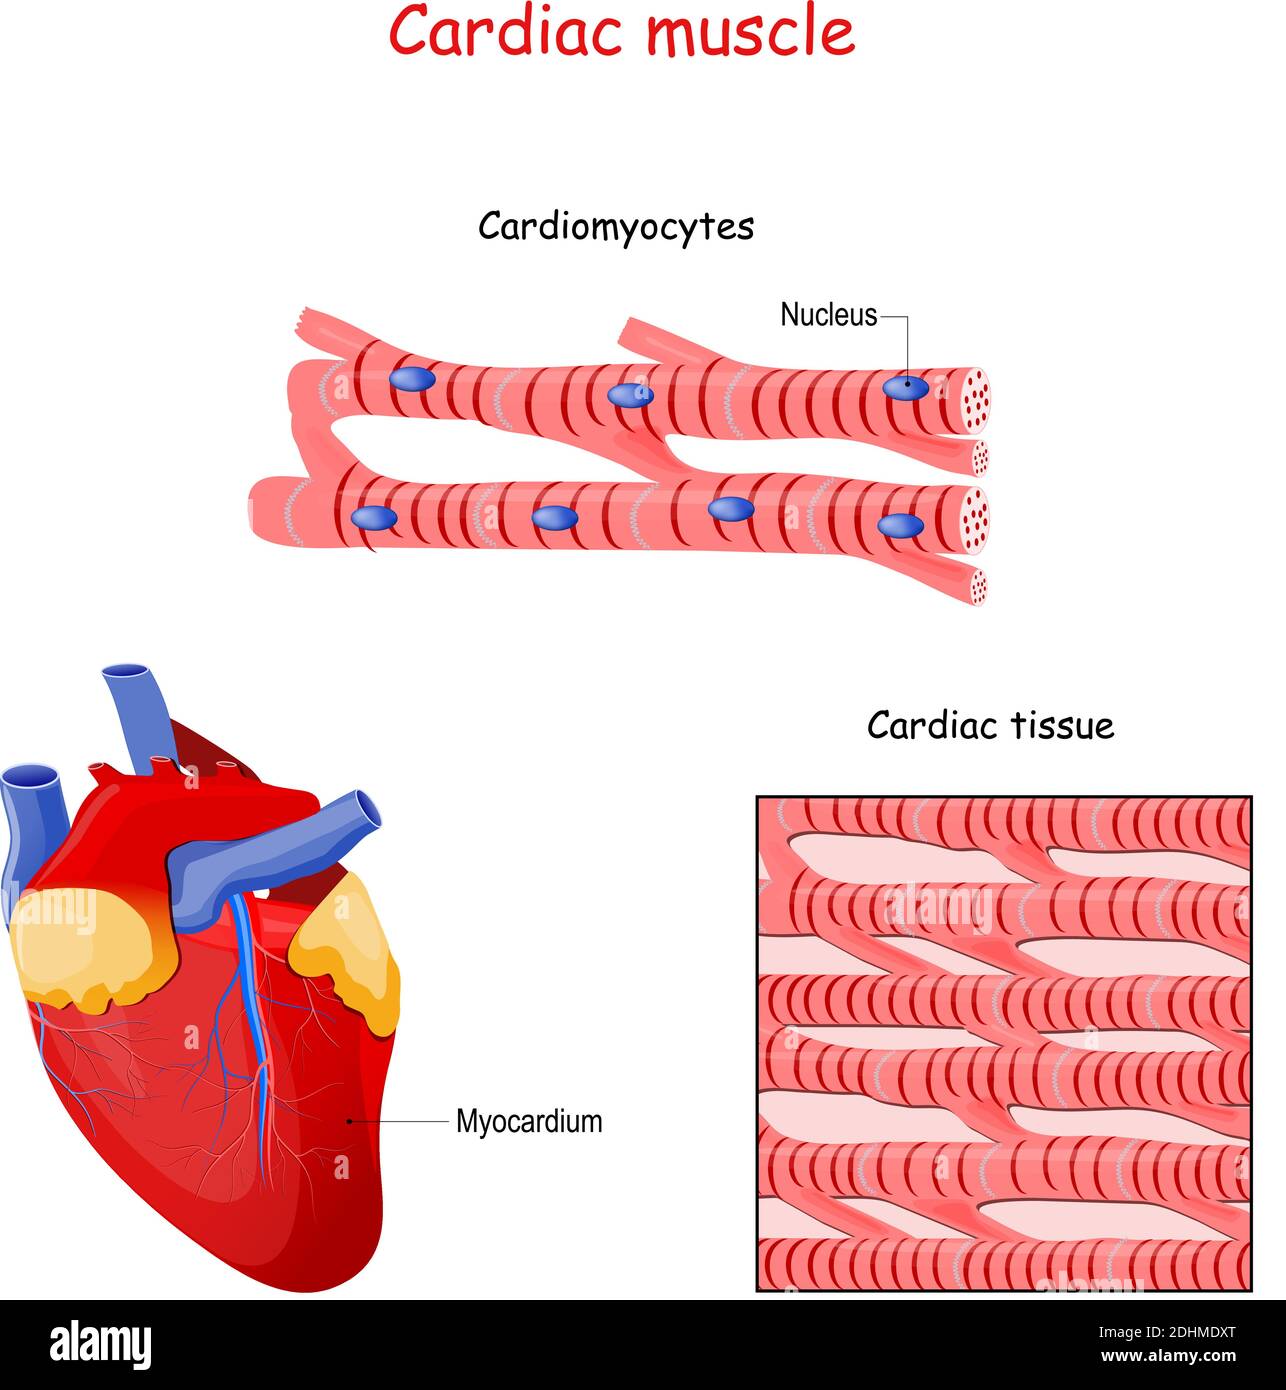 Cardiac Muscle Tissue Anatomy